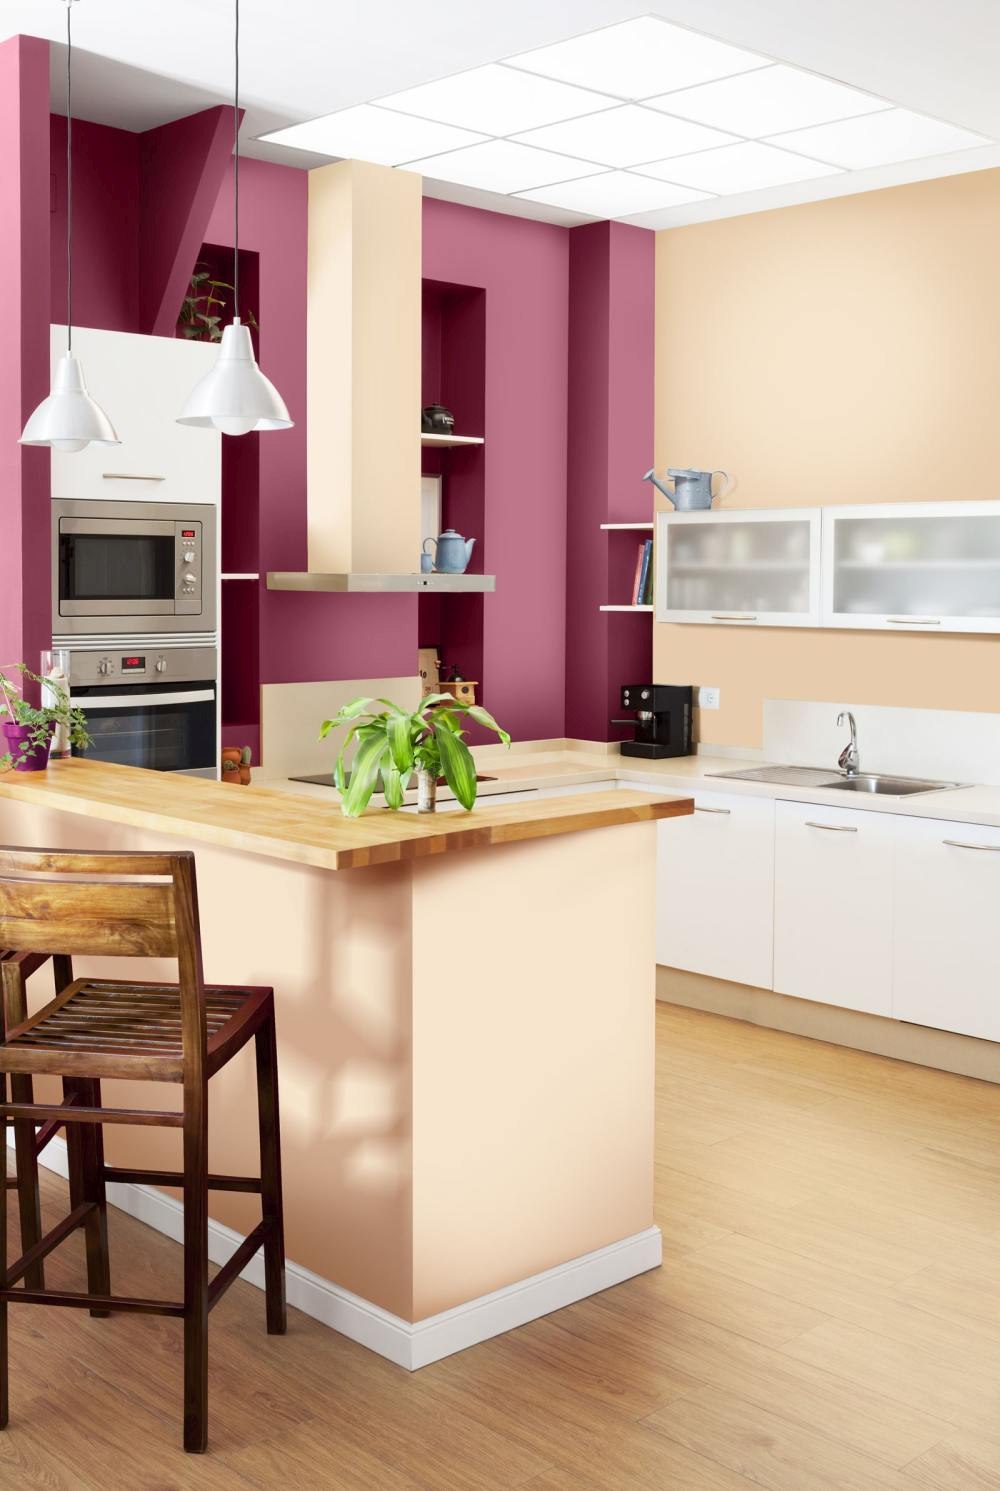 bordowa kuchnia, bordowe ściany w kuchni, bordowa farba w kuchni